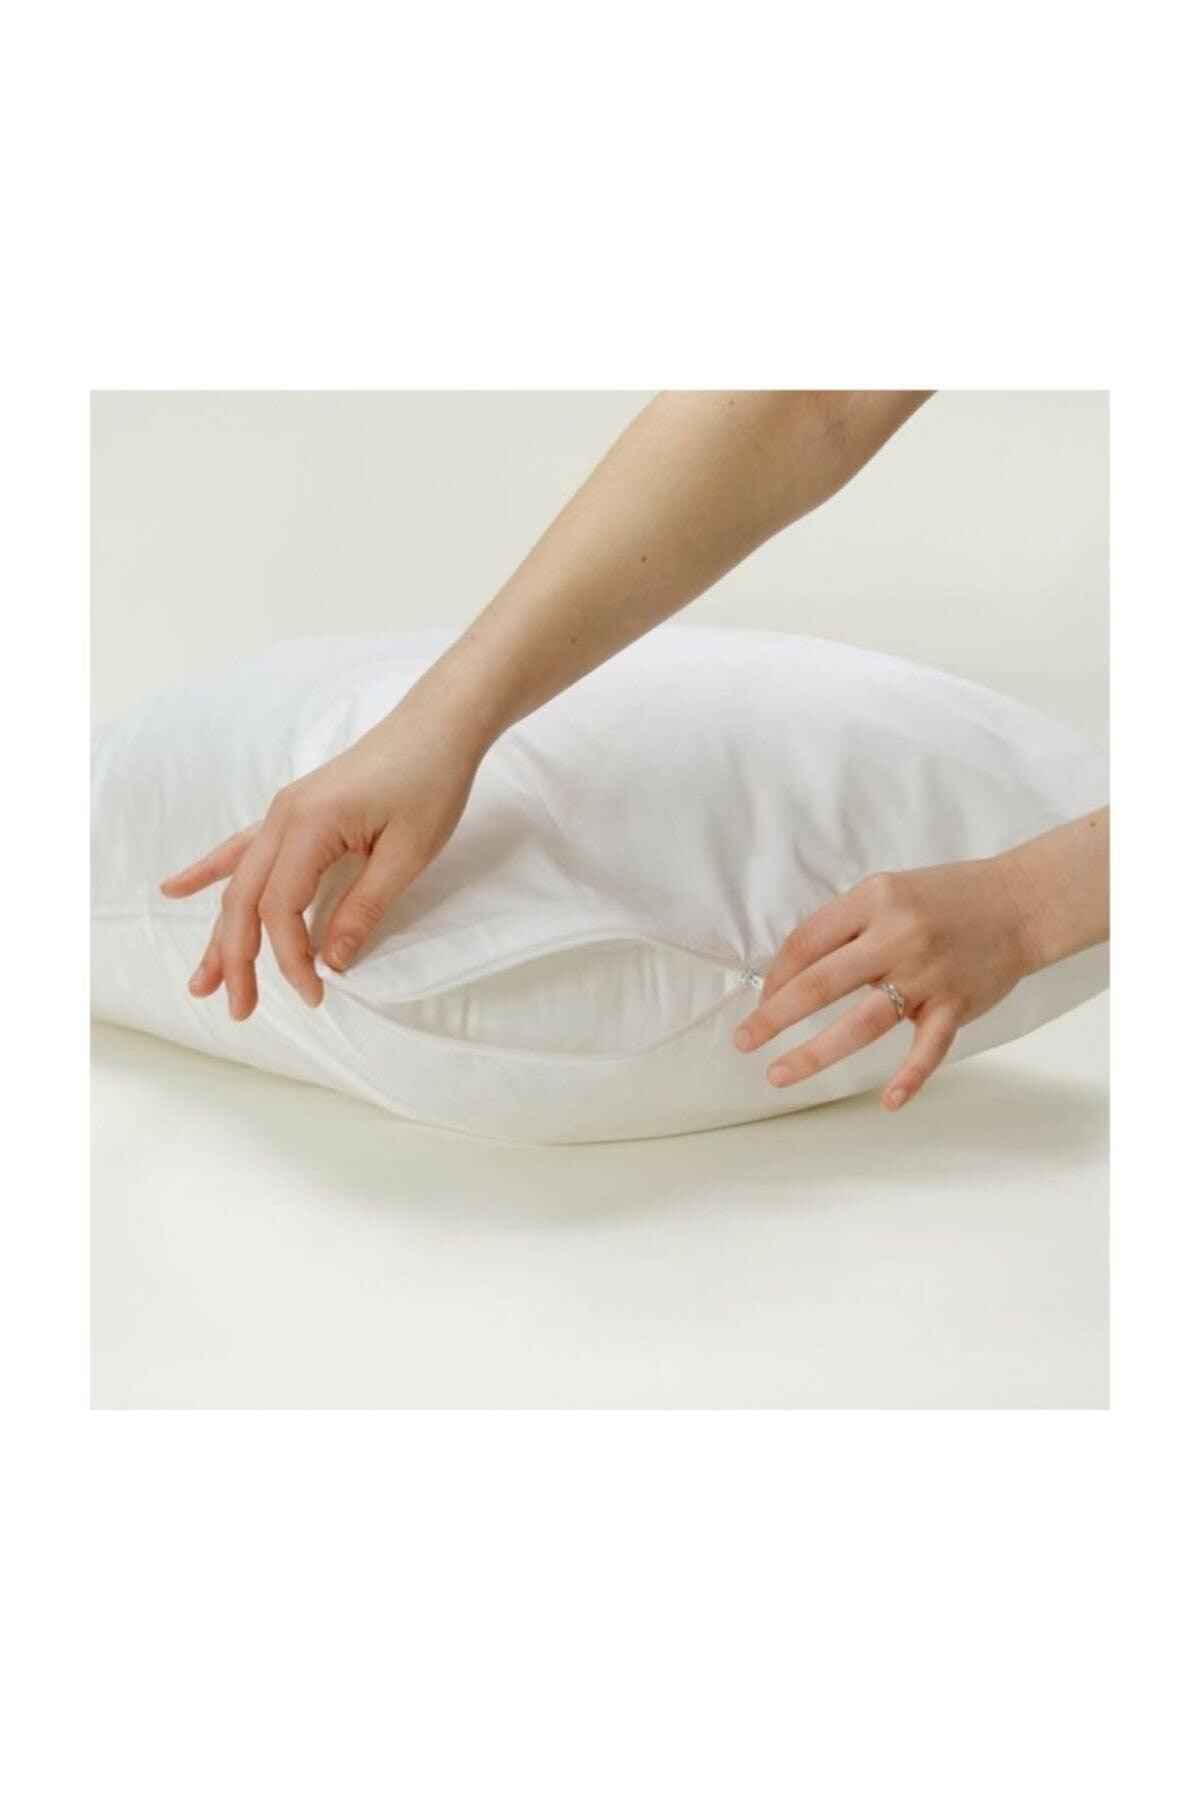 White Zippered Pillowcase 50x70 cm 10 pcs - Swordslife